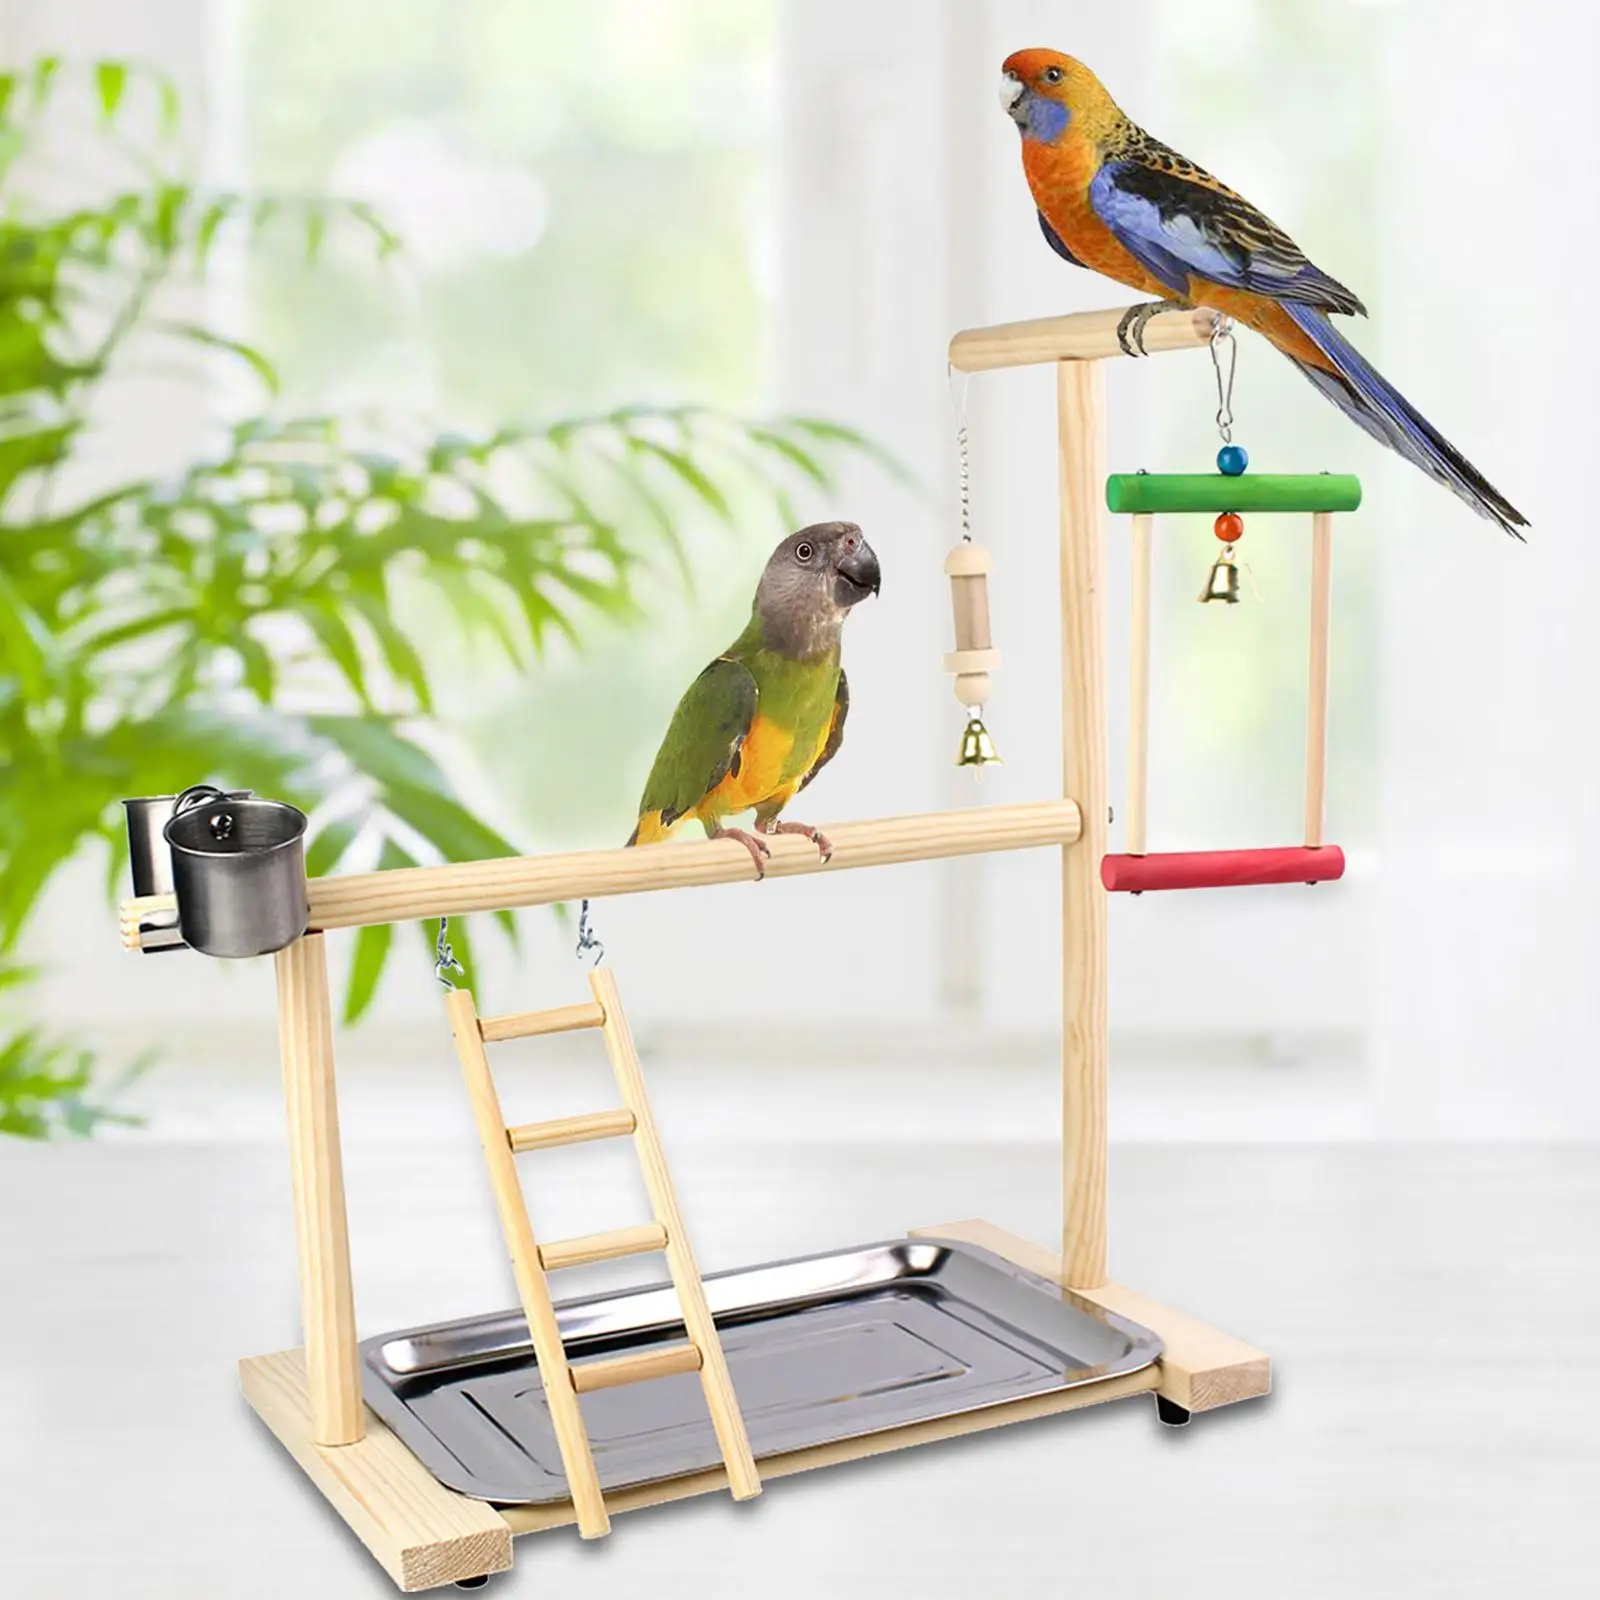 Toys Bird Perch Platform Bird Playground with Feeder Gym Ladder Playground Climbing Ladder Pet Parrot Playstand for Parakeet